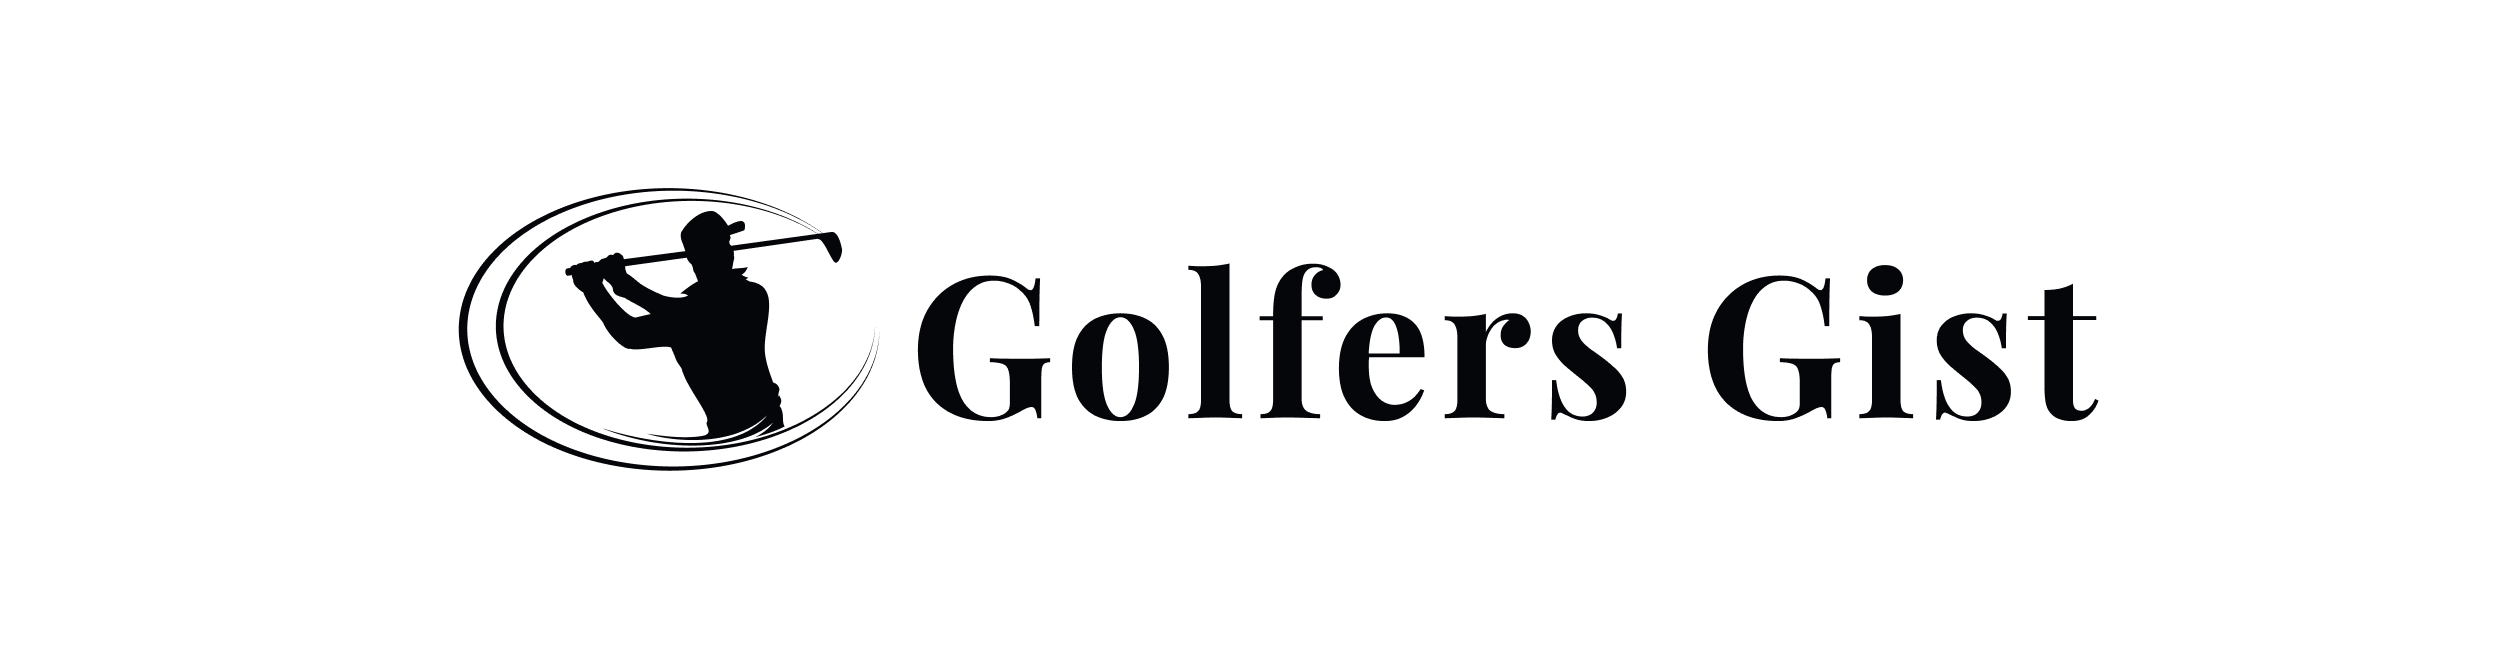 Golfers Gist